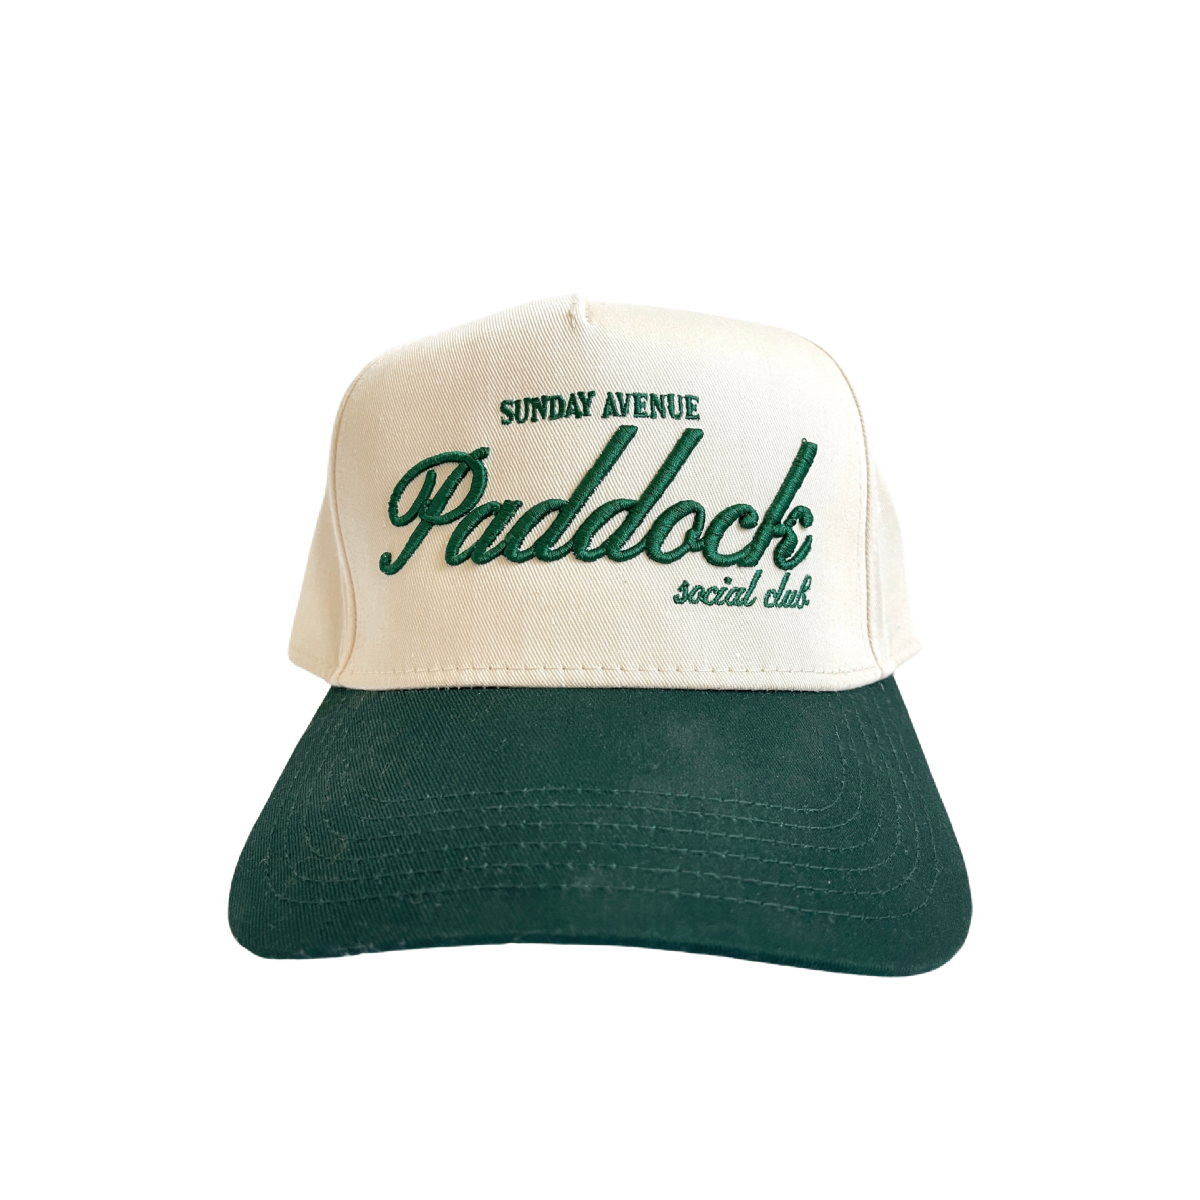 Paddock Social Club Hat Vol. 2 - Cream + Green